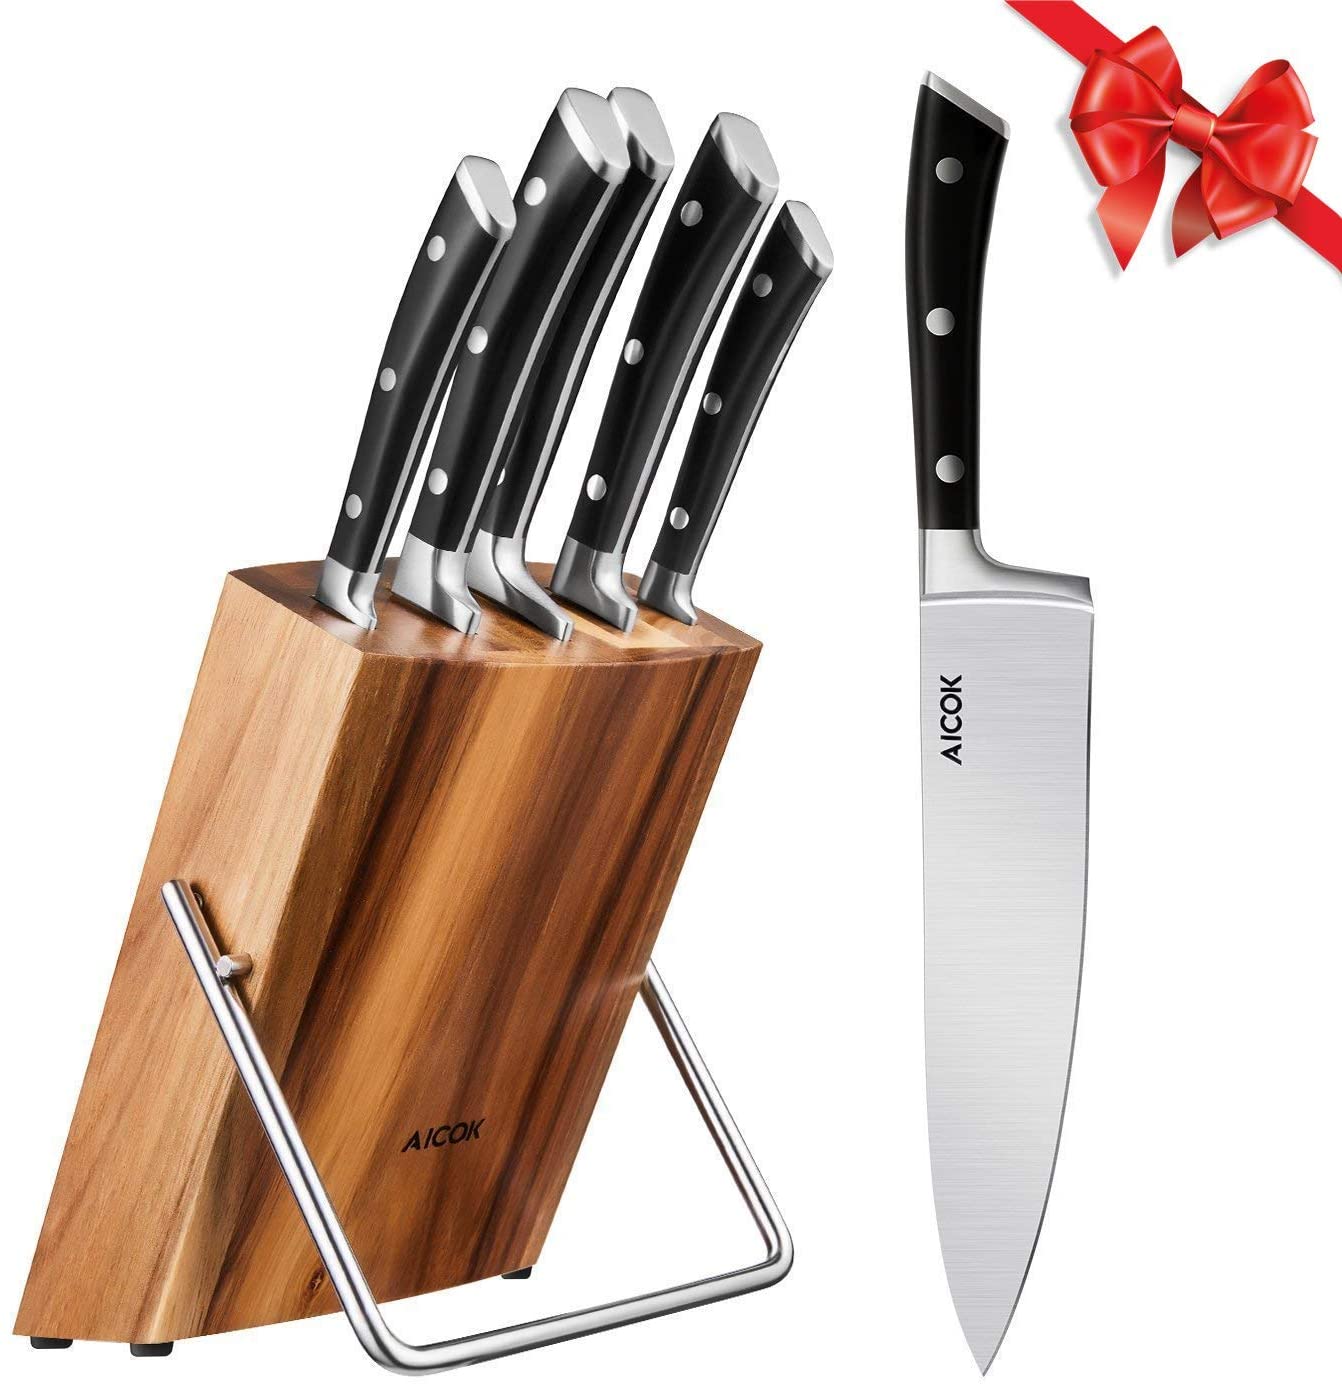 https://s.libertaddigital.com/2020/12/19/juego-de-cuchillos-de-cocina-aicok-6-piezas.jpg